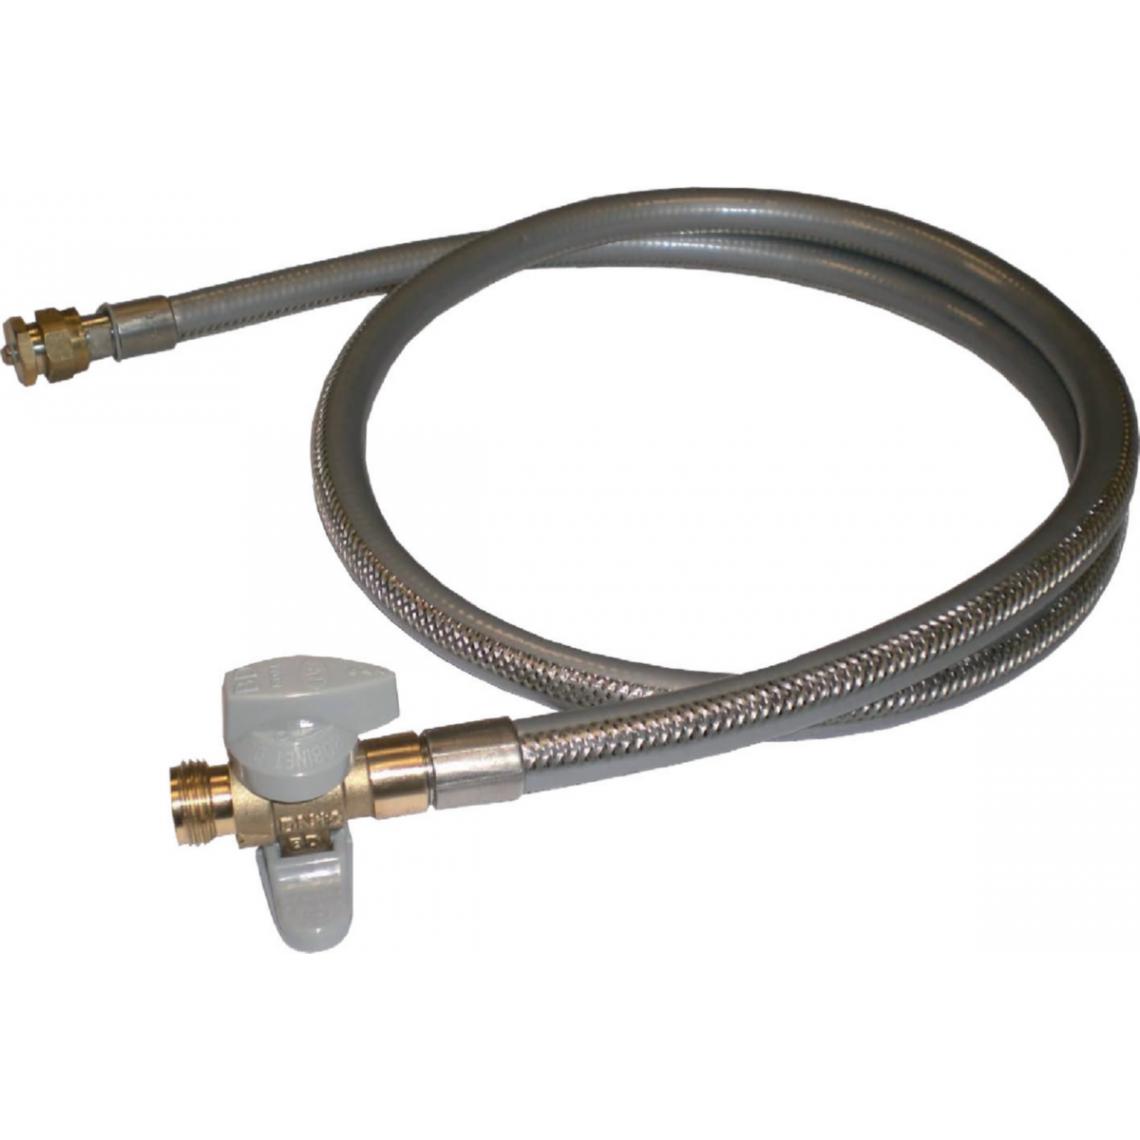 Banides & Debeaurain - robinet gaz - roai - m / m - robiflex - flexible 1.50 m et bouchon - diamètre 15 x 21 mm - banides 0239105 - Flexible gaz